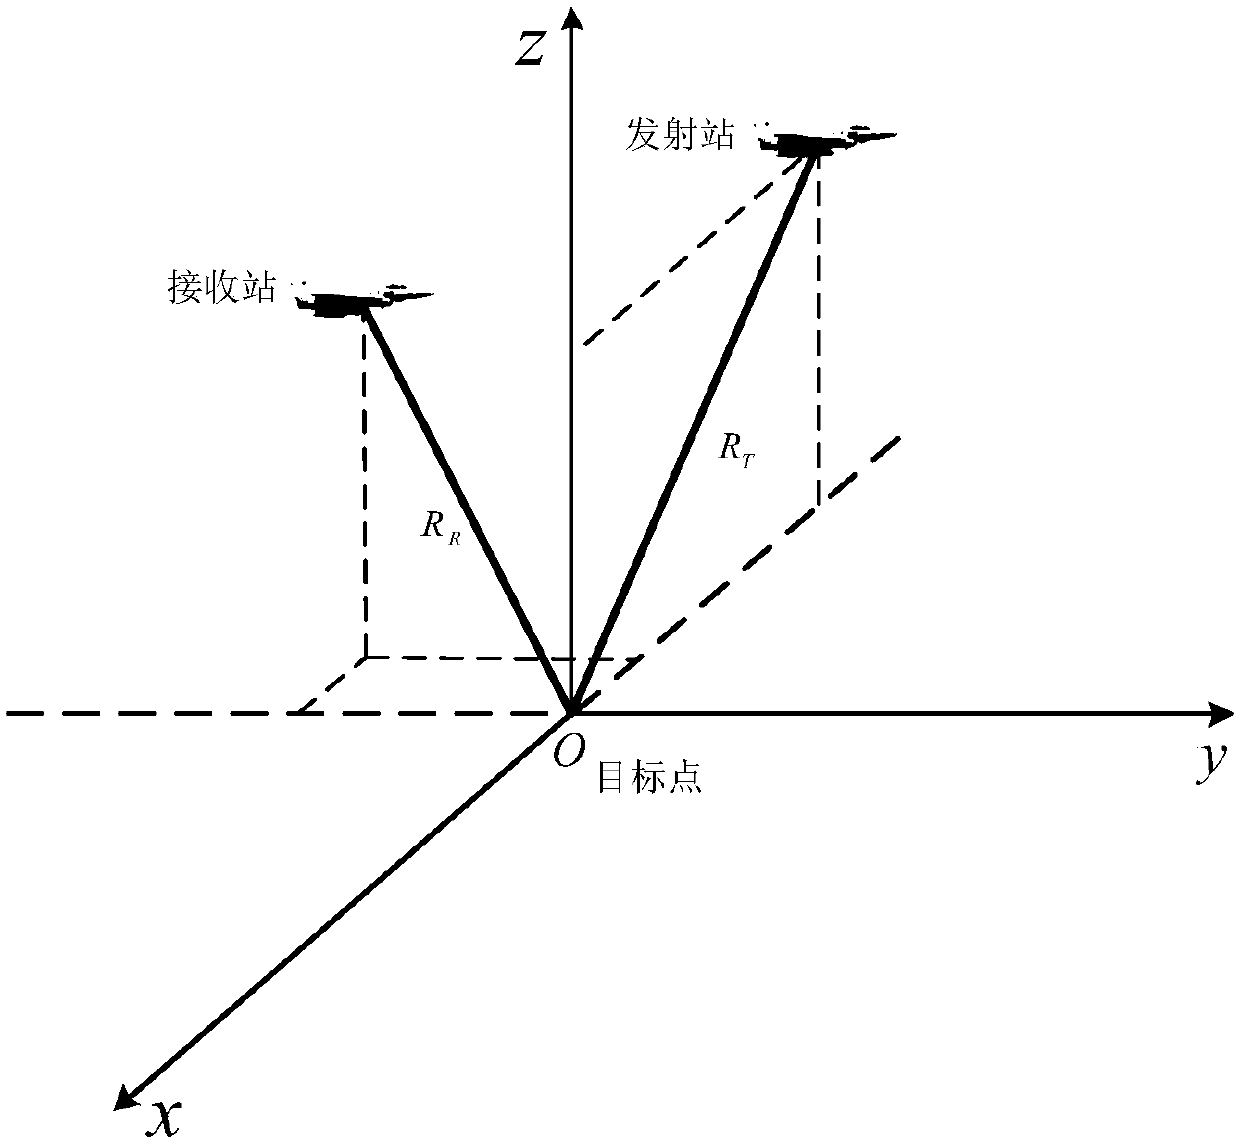 Bistatic synthetic aperture radar location error calculation method